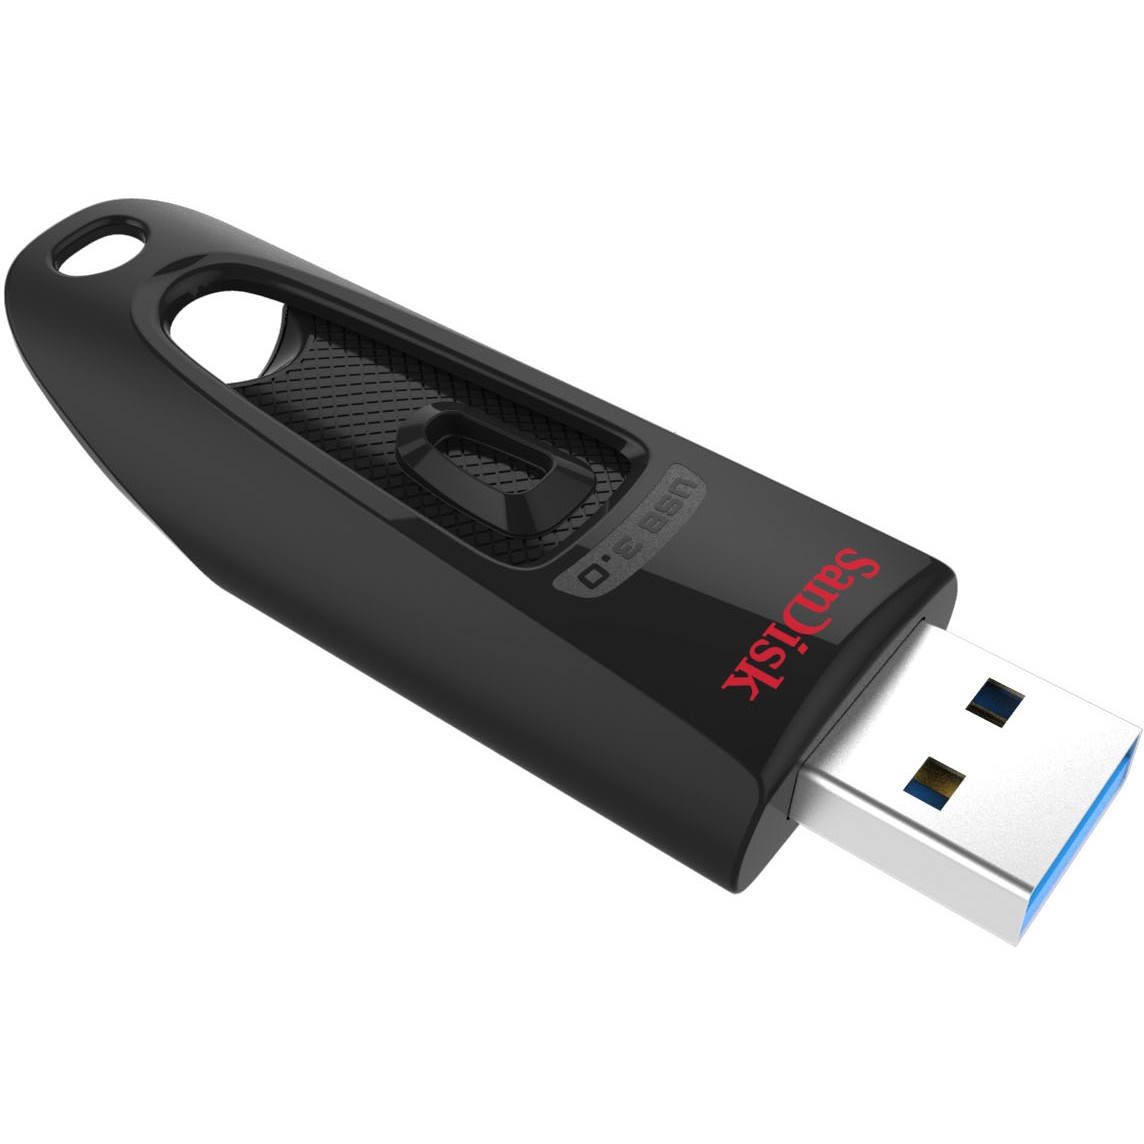 Sandisk SDCZ48-016G-U46, USB-Stick, SanDisk Ultra USB  (BILD2)